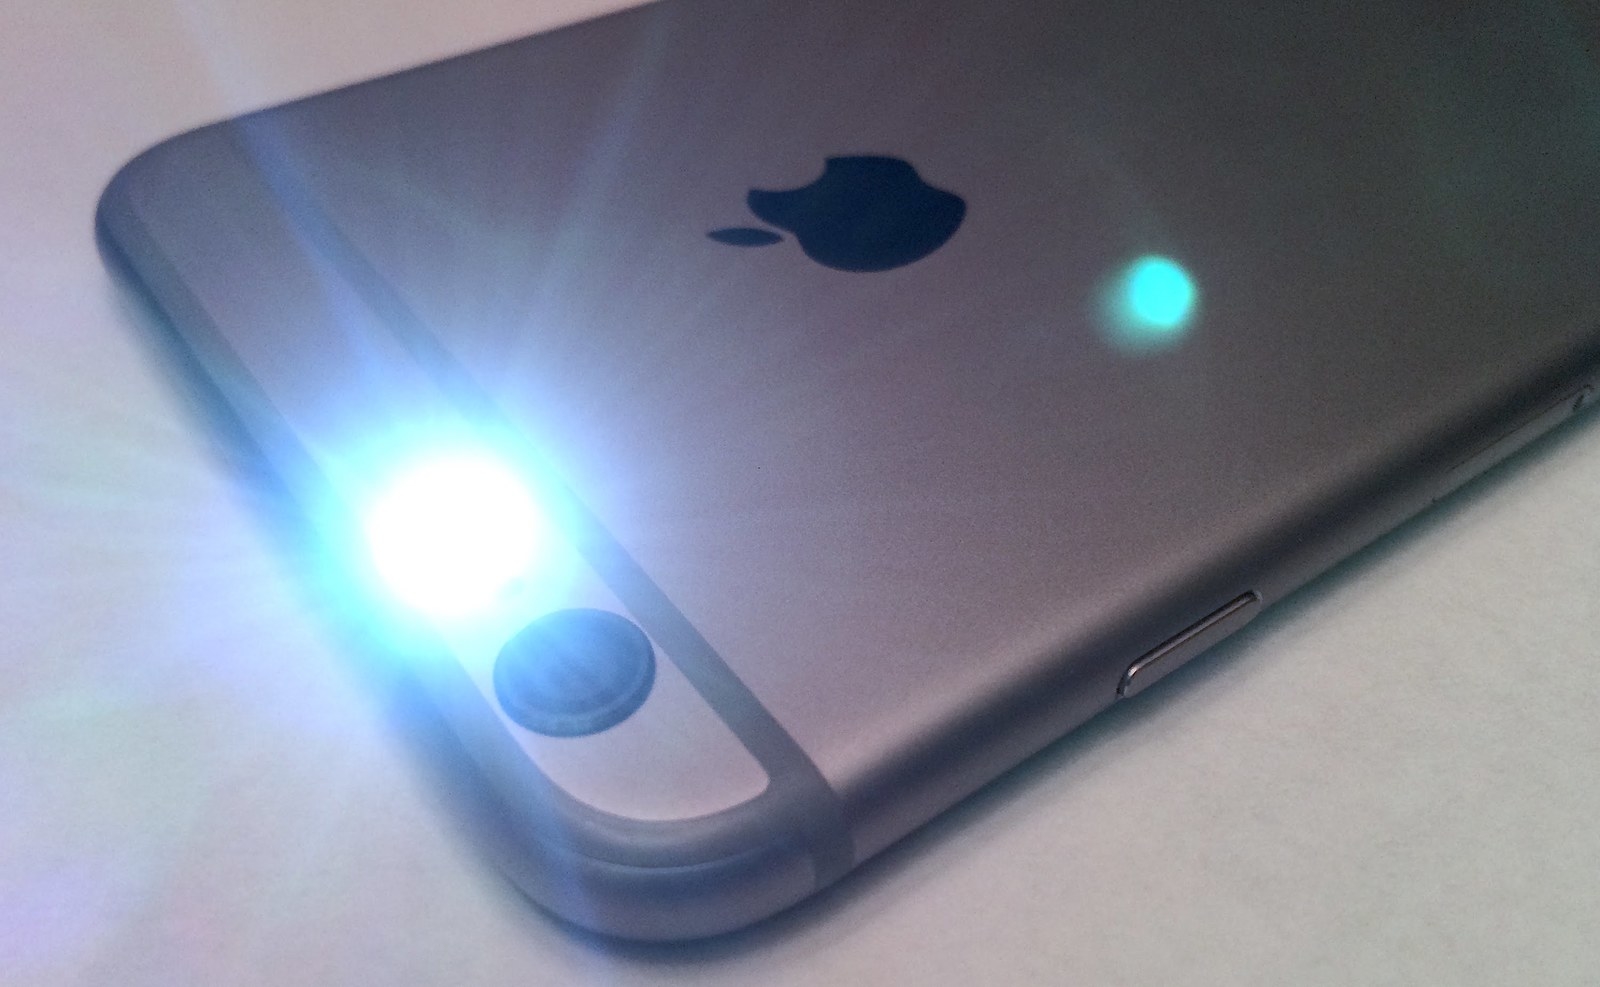 Flashlight lit up on iPhone